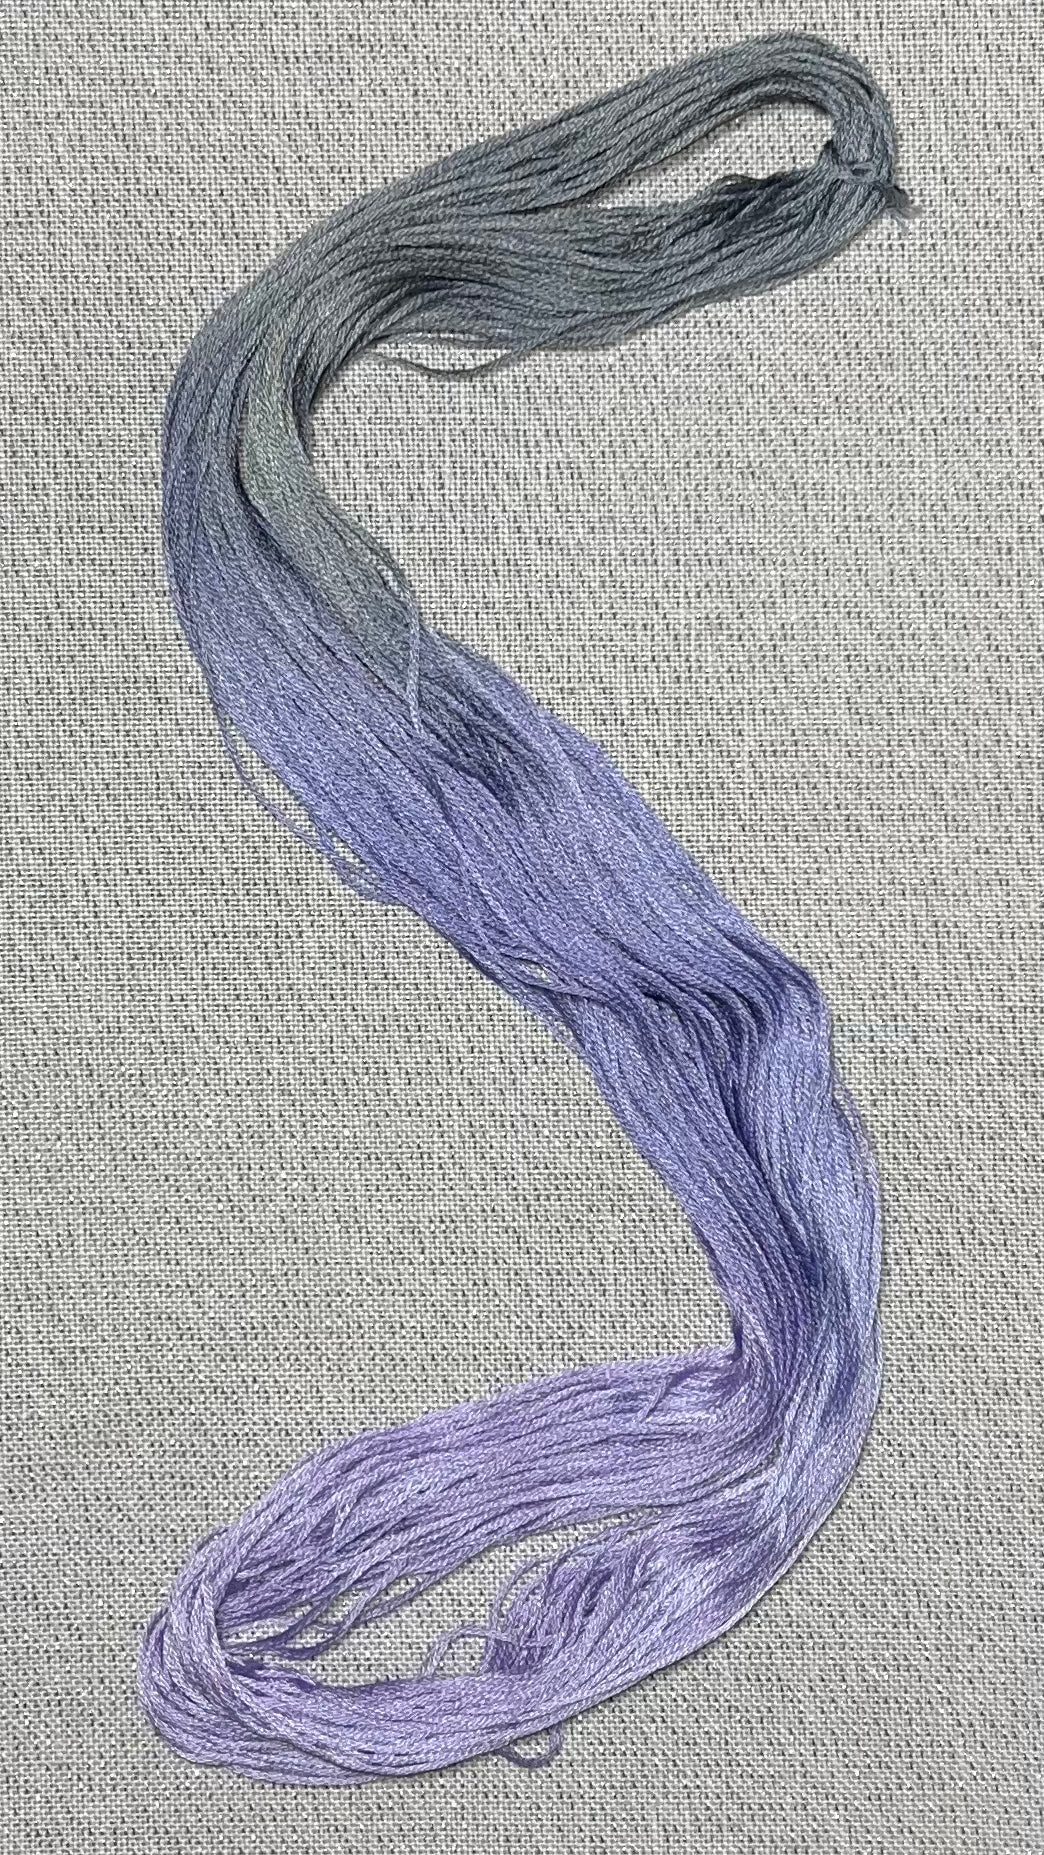 Cotton hand dyed floss - Lavender Mist